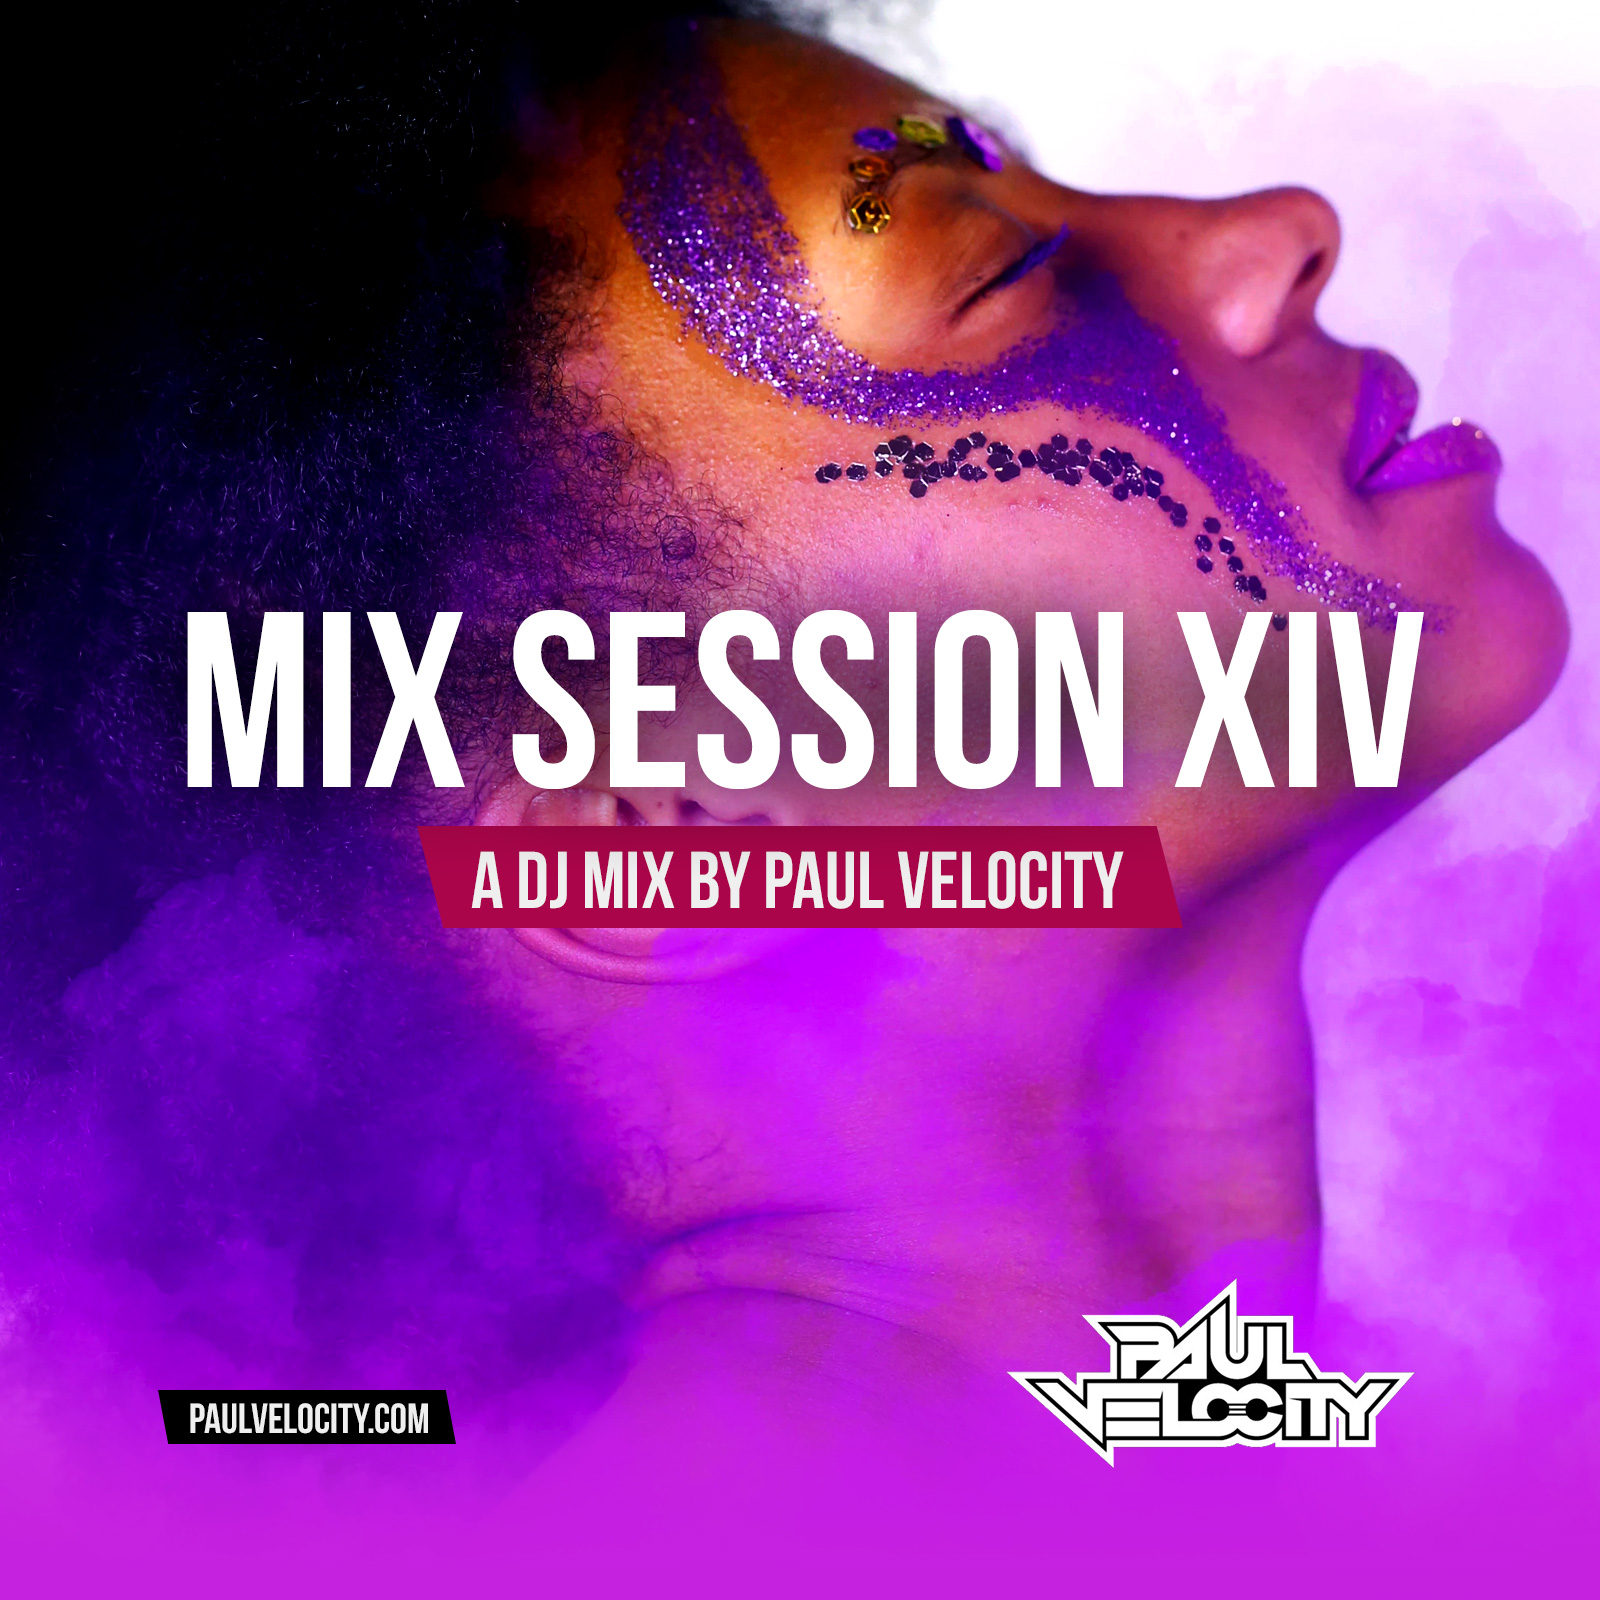 Mix Session XIV